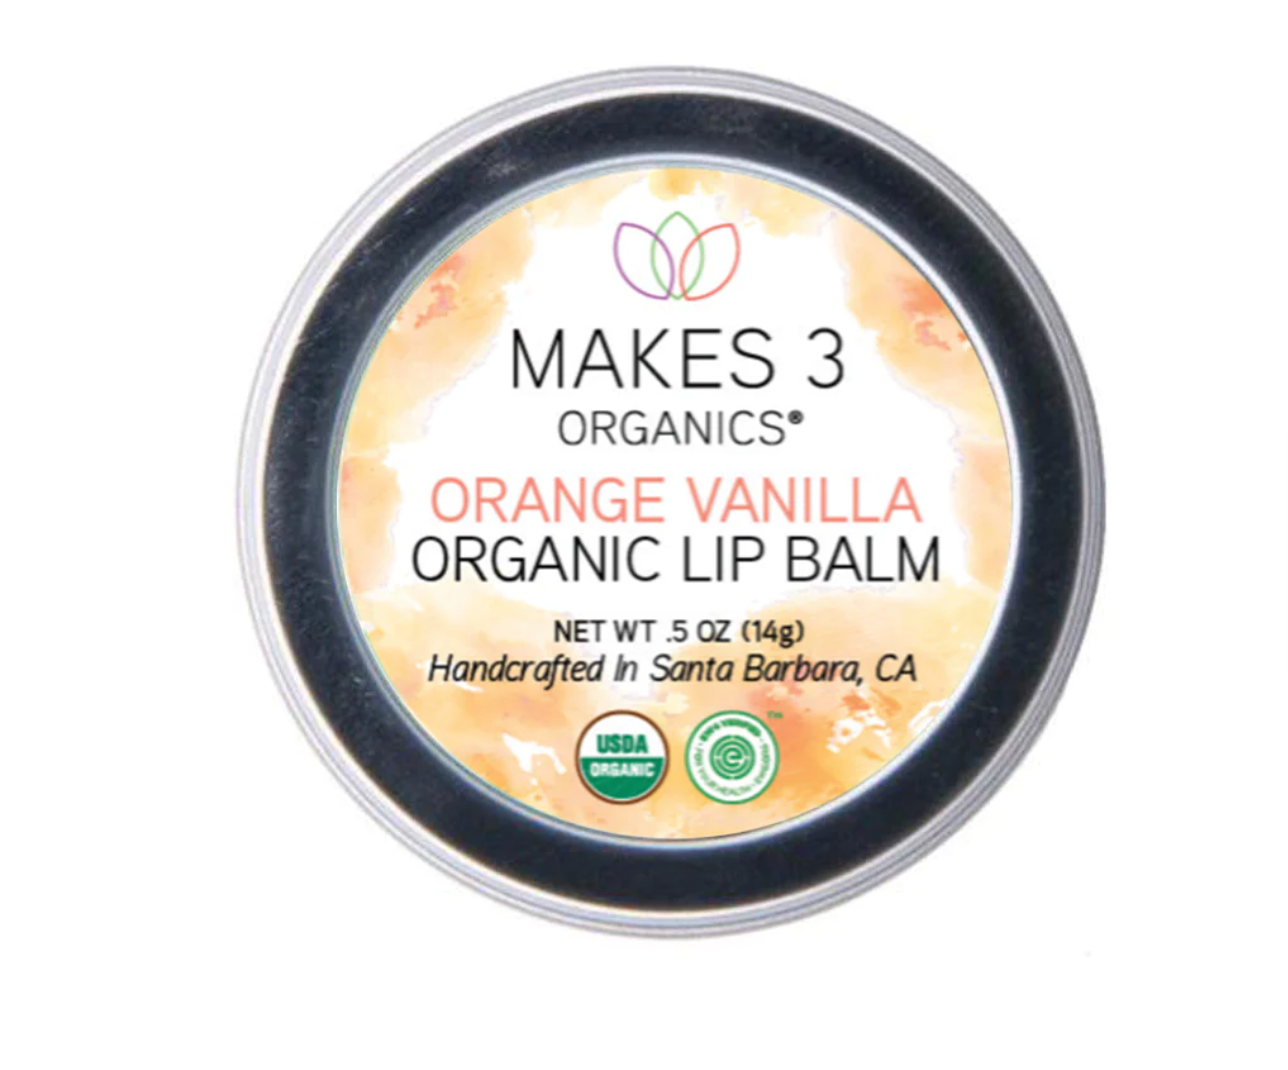 Makes 3 Organics Organic Lip Balm